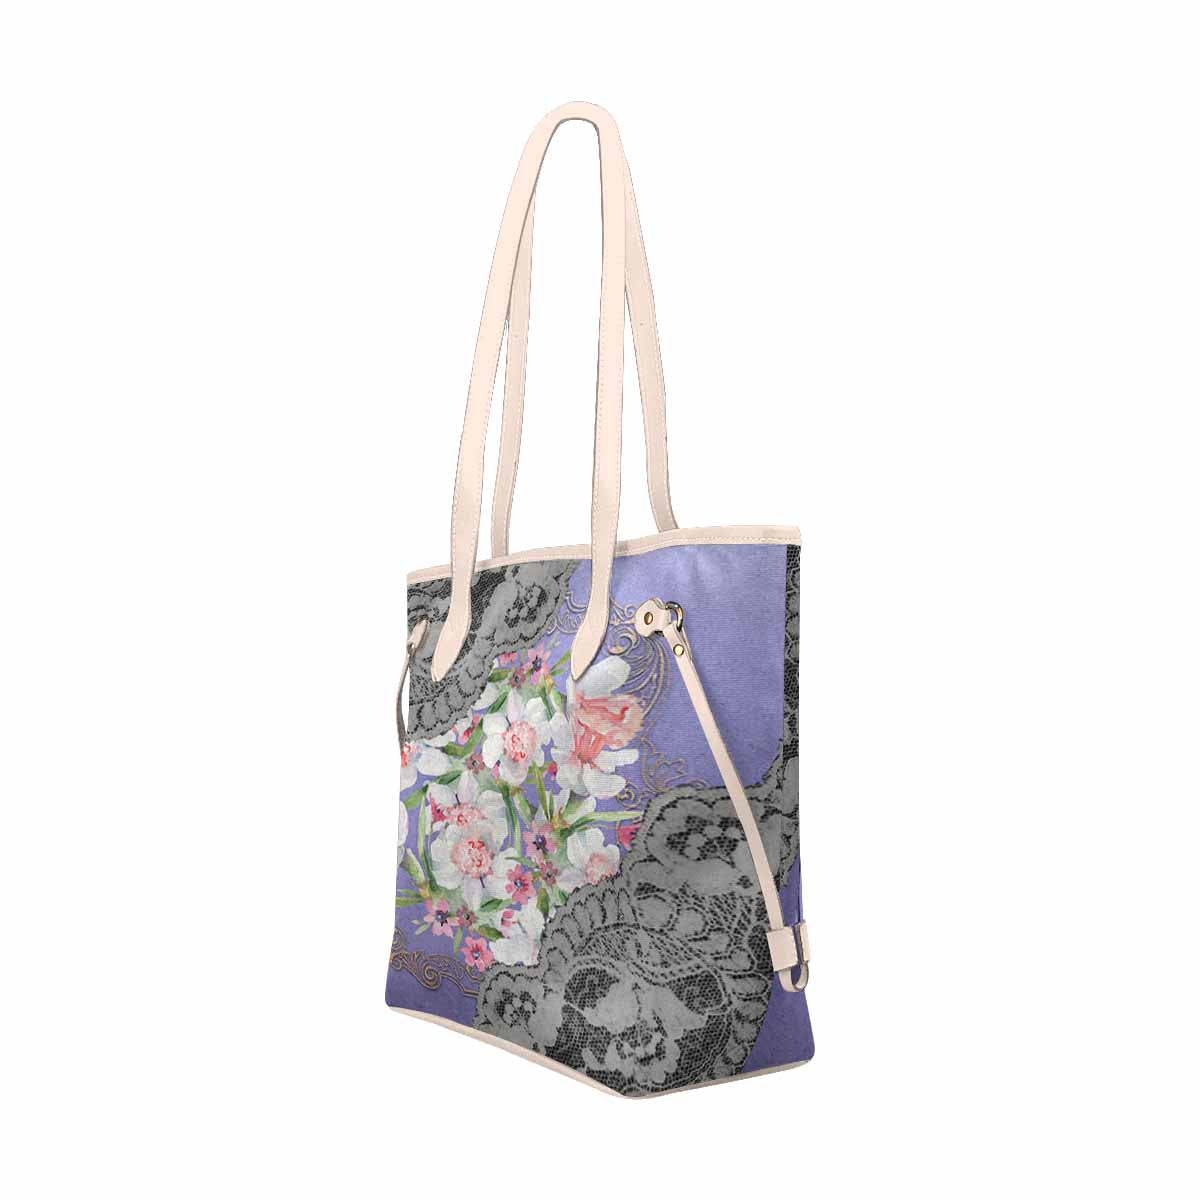 Victorian printed lace handbag, MODEL 1695361 Design 45